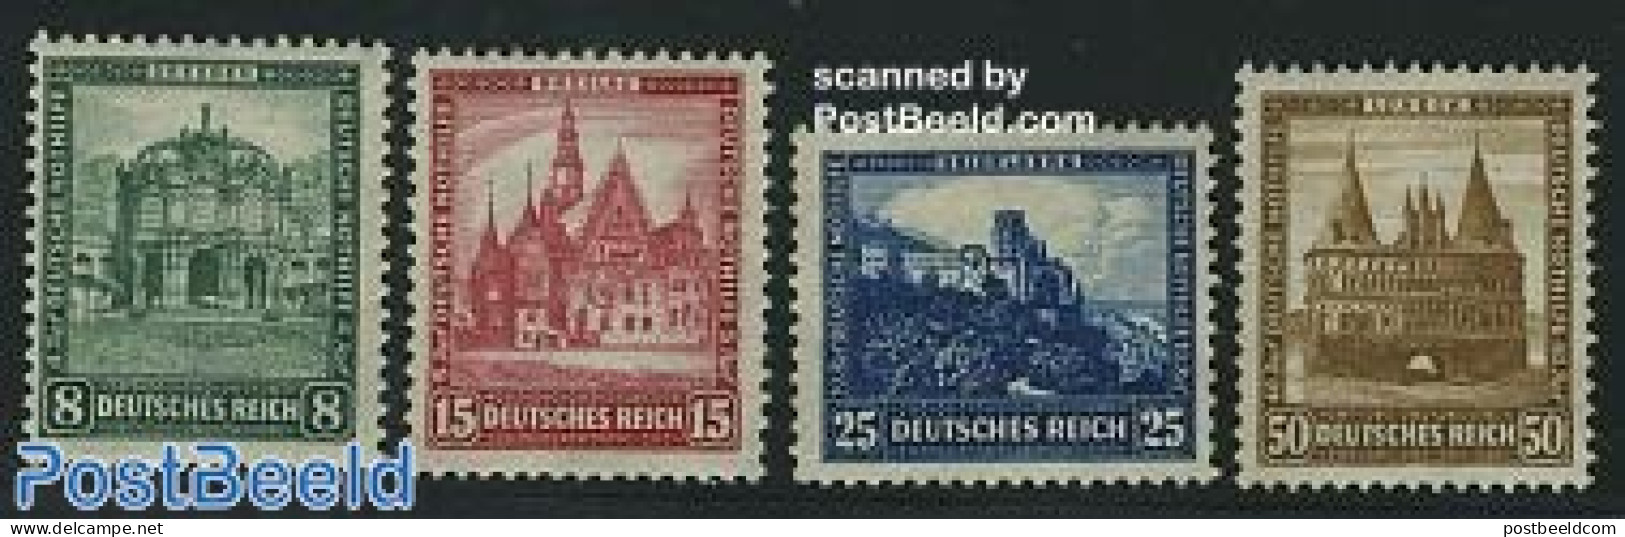 Germany, Empire 1931 Emergency Aid 4v, Unused (hinged), Art - Castles & Fortifications - Ungebraucht